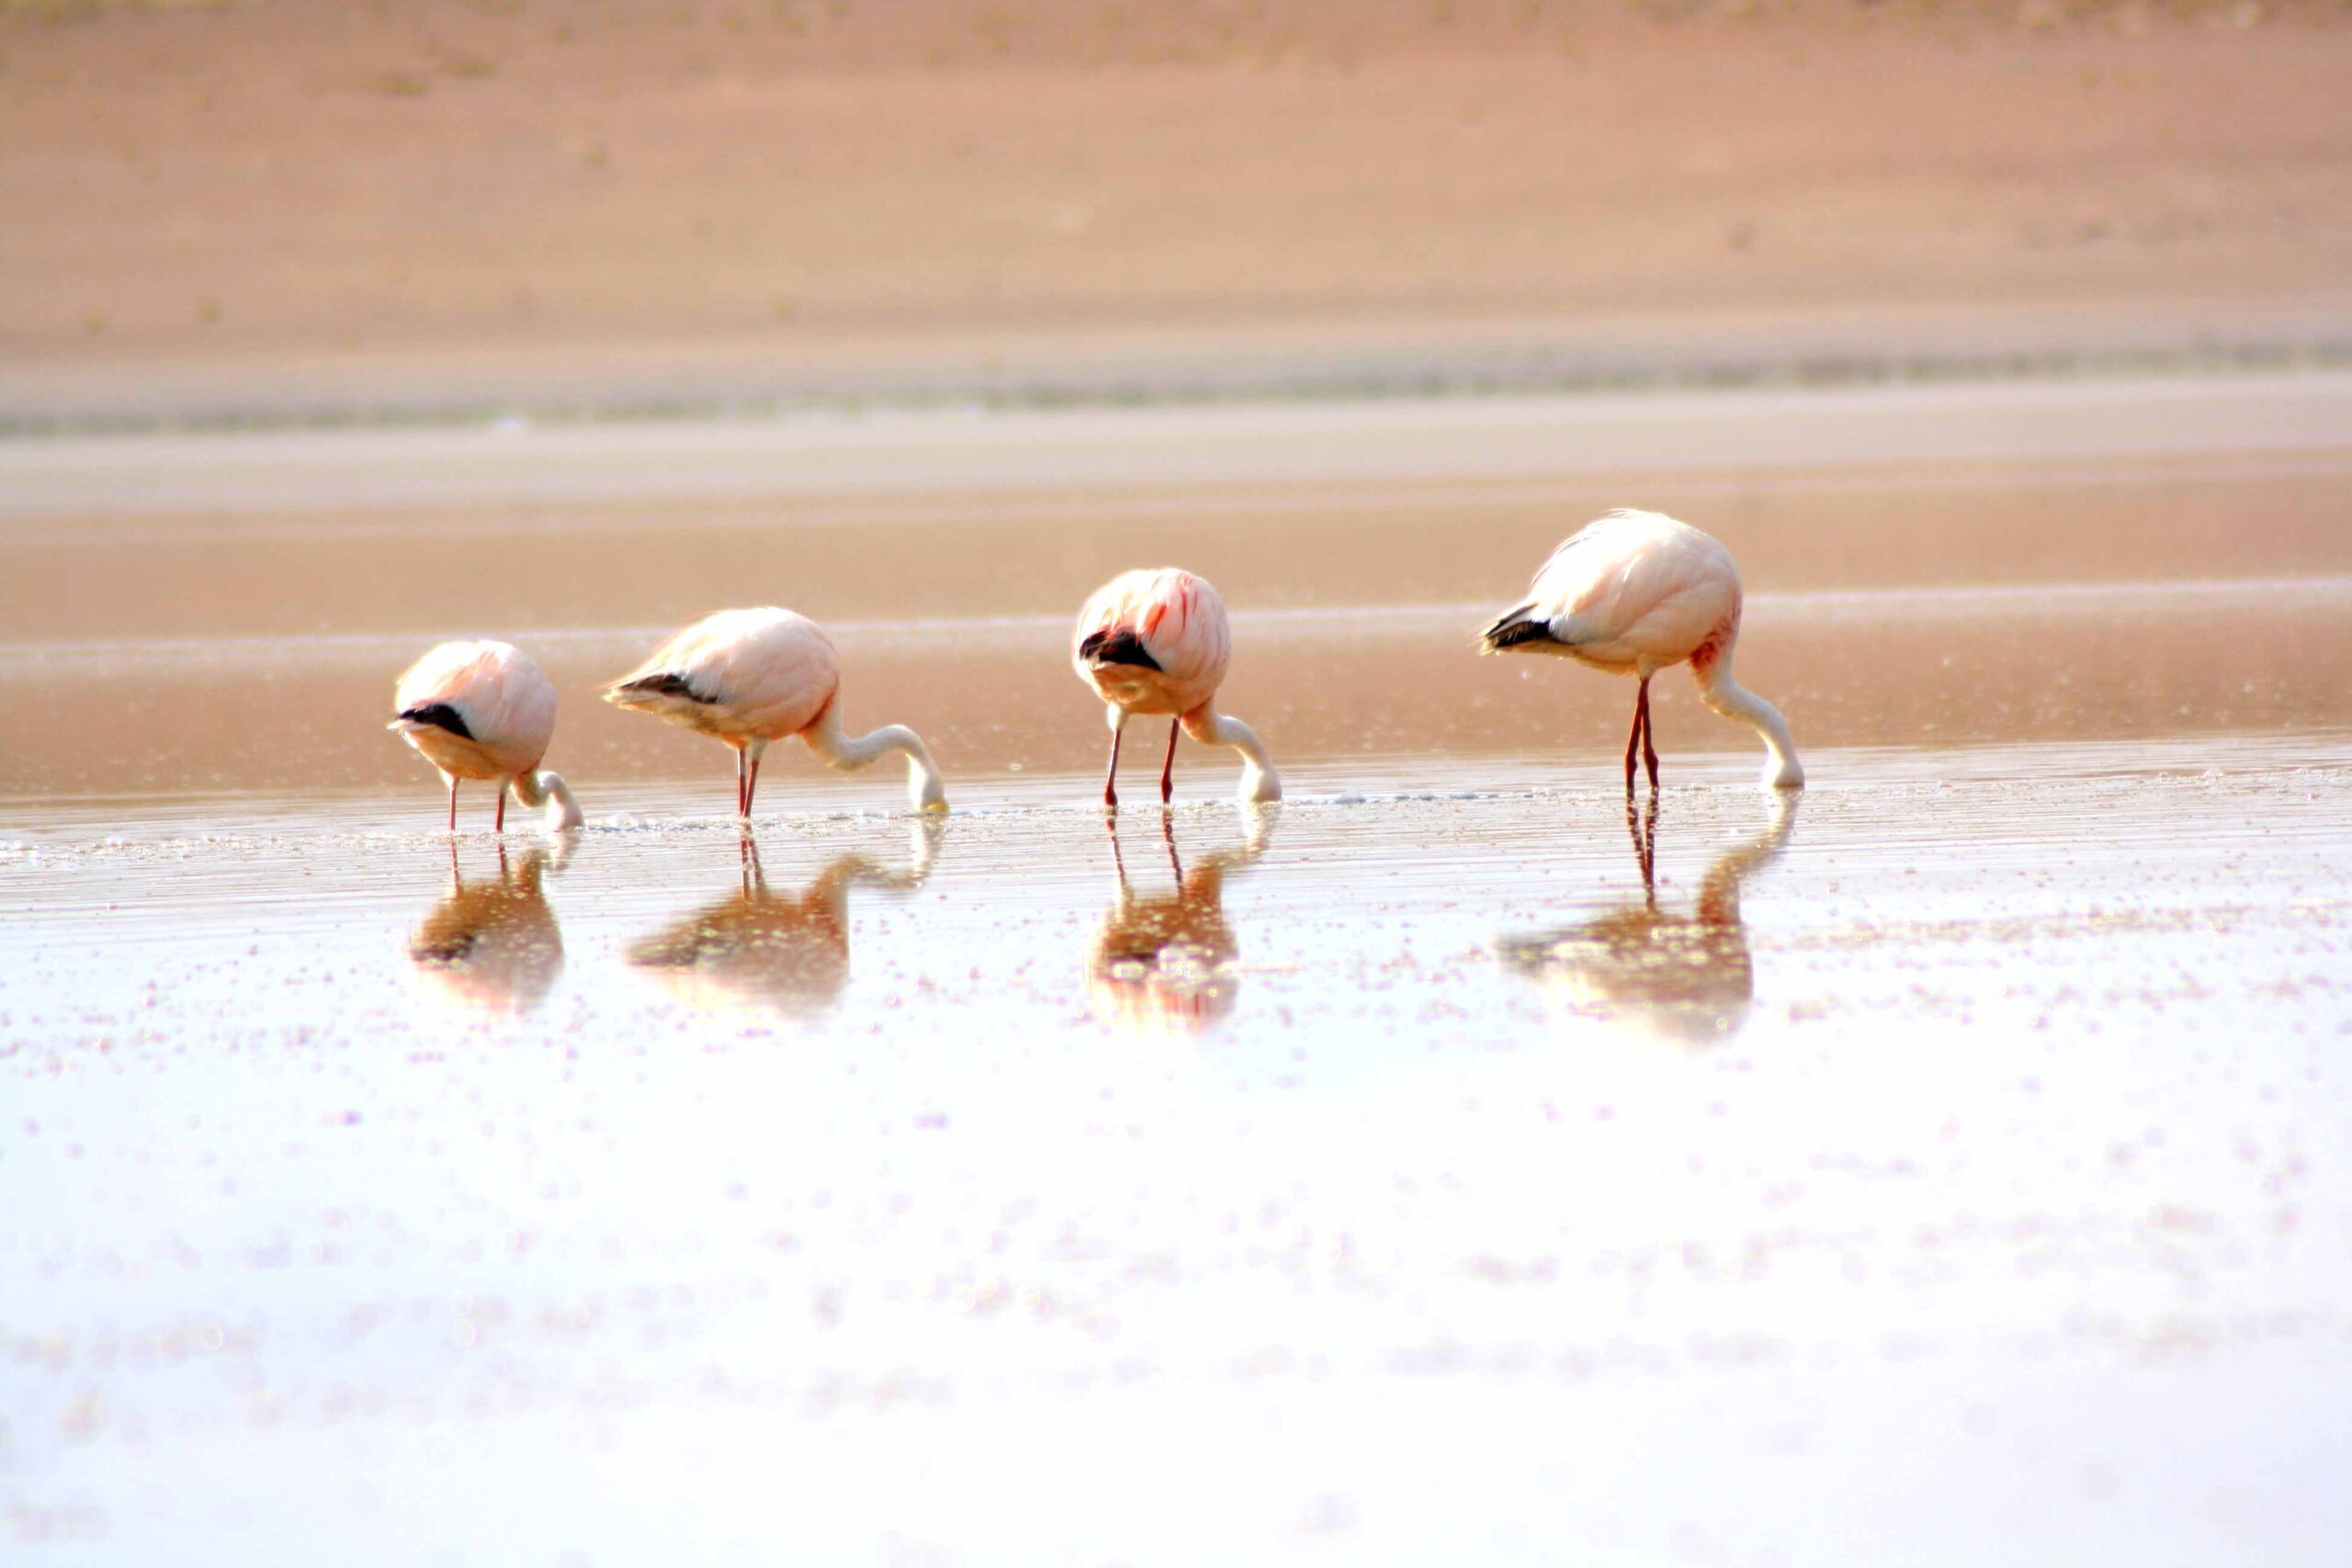 Flamingos in Bolivia